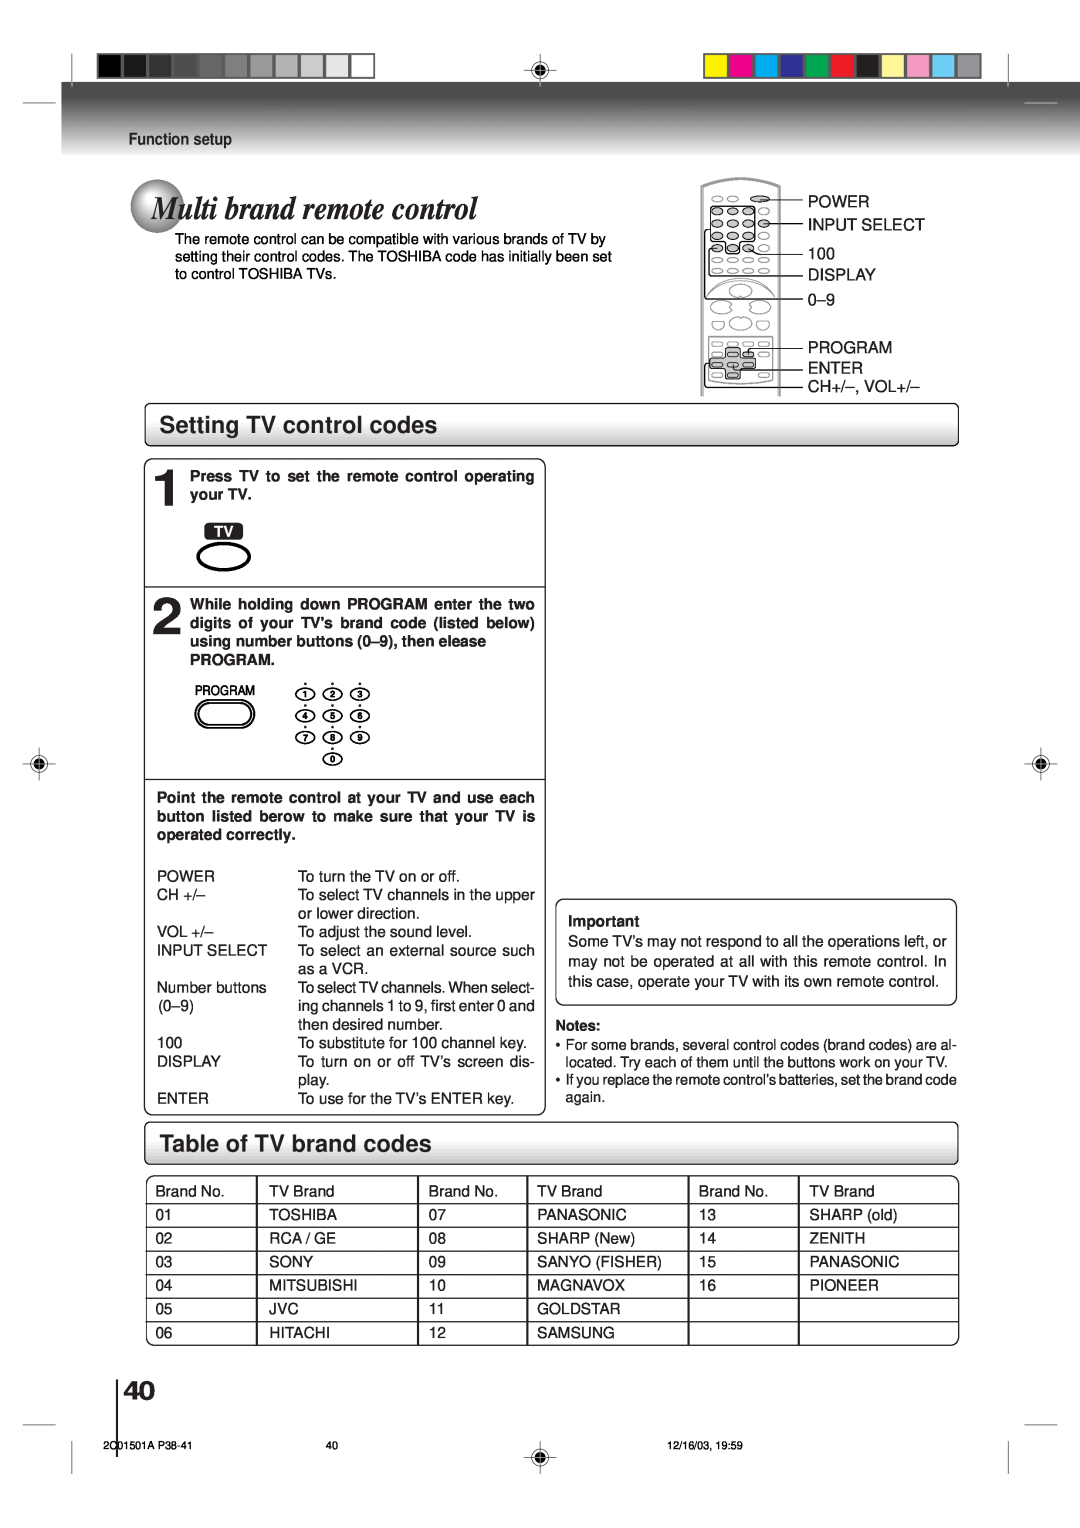 Toshiba SD-K740SU owner manual Multi brand remote control, Setting TV control codes, Table of TV brand codes, Program 